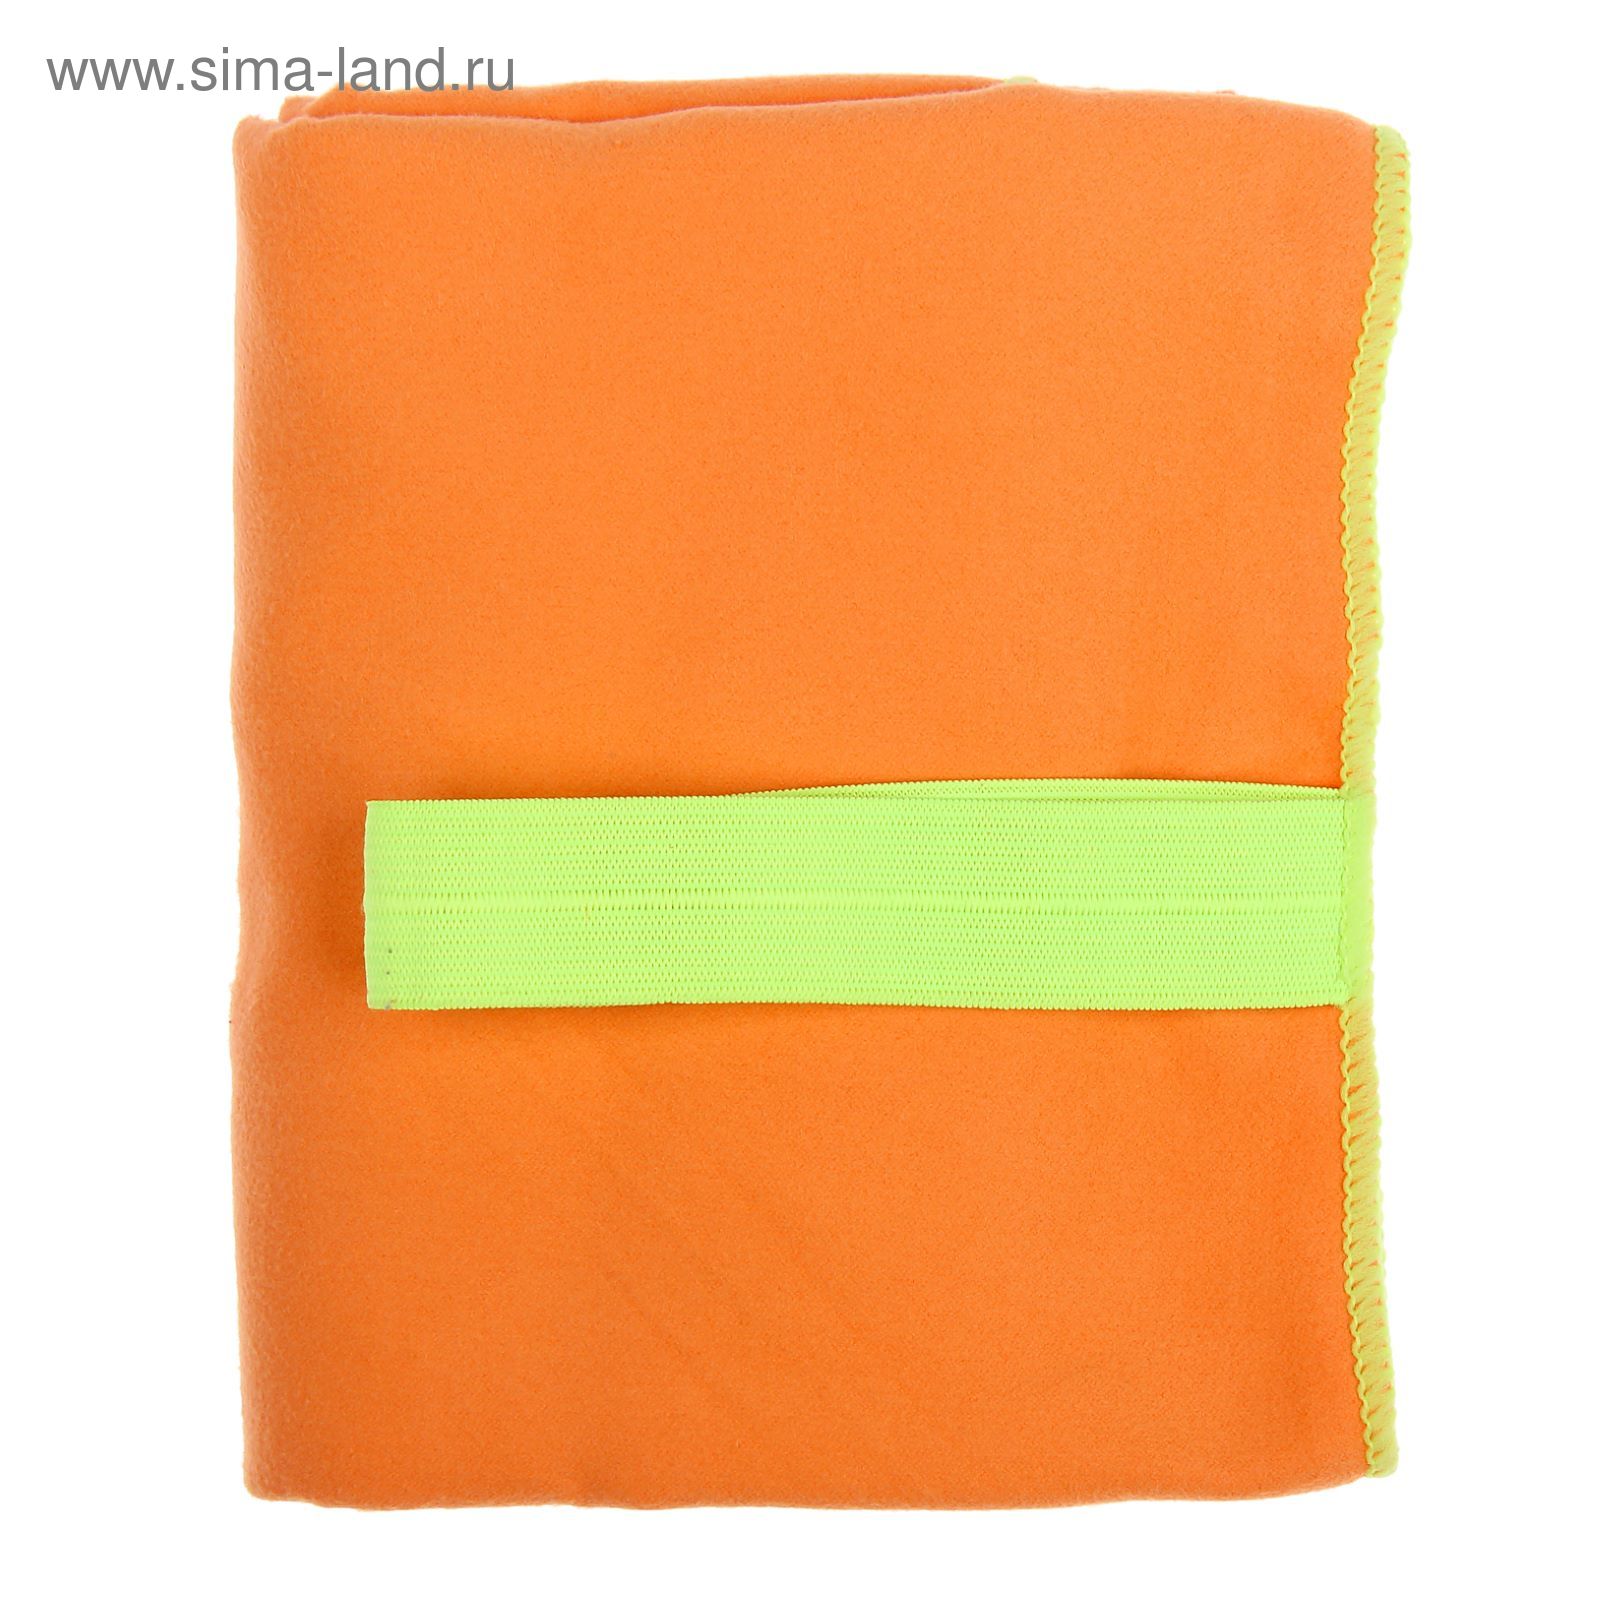 Спортивное полотенце ONLITOP, размер 40х55 см, оранжевый, 200 г/м2